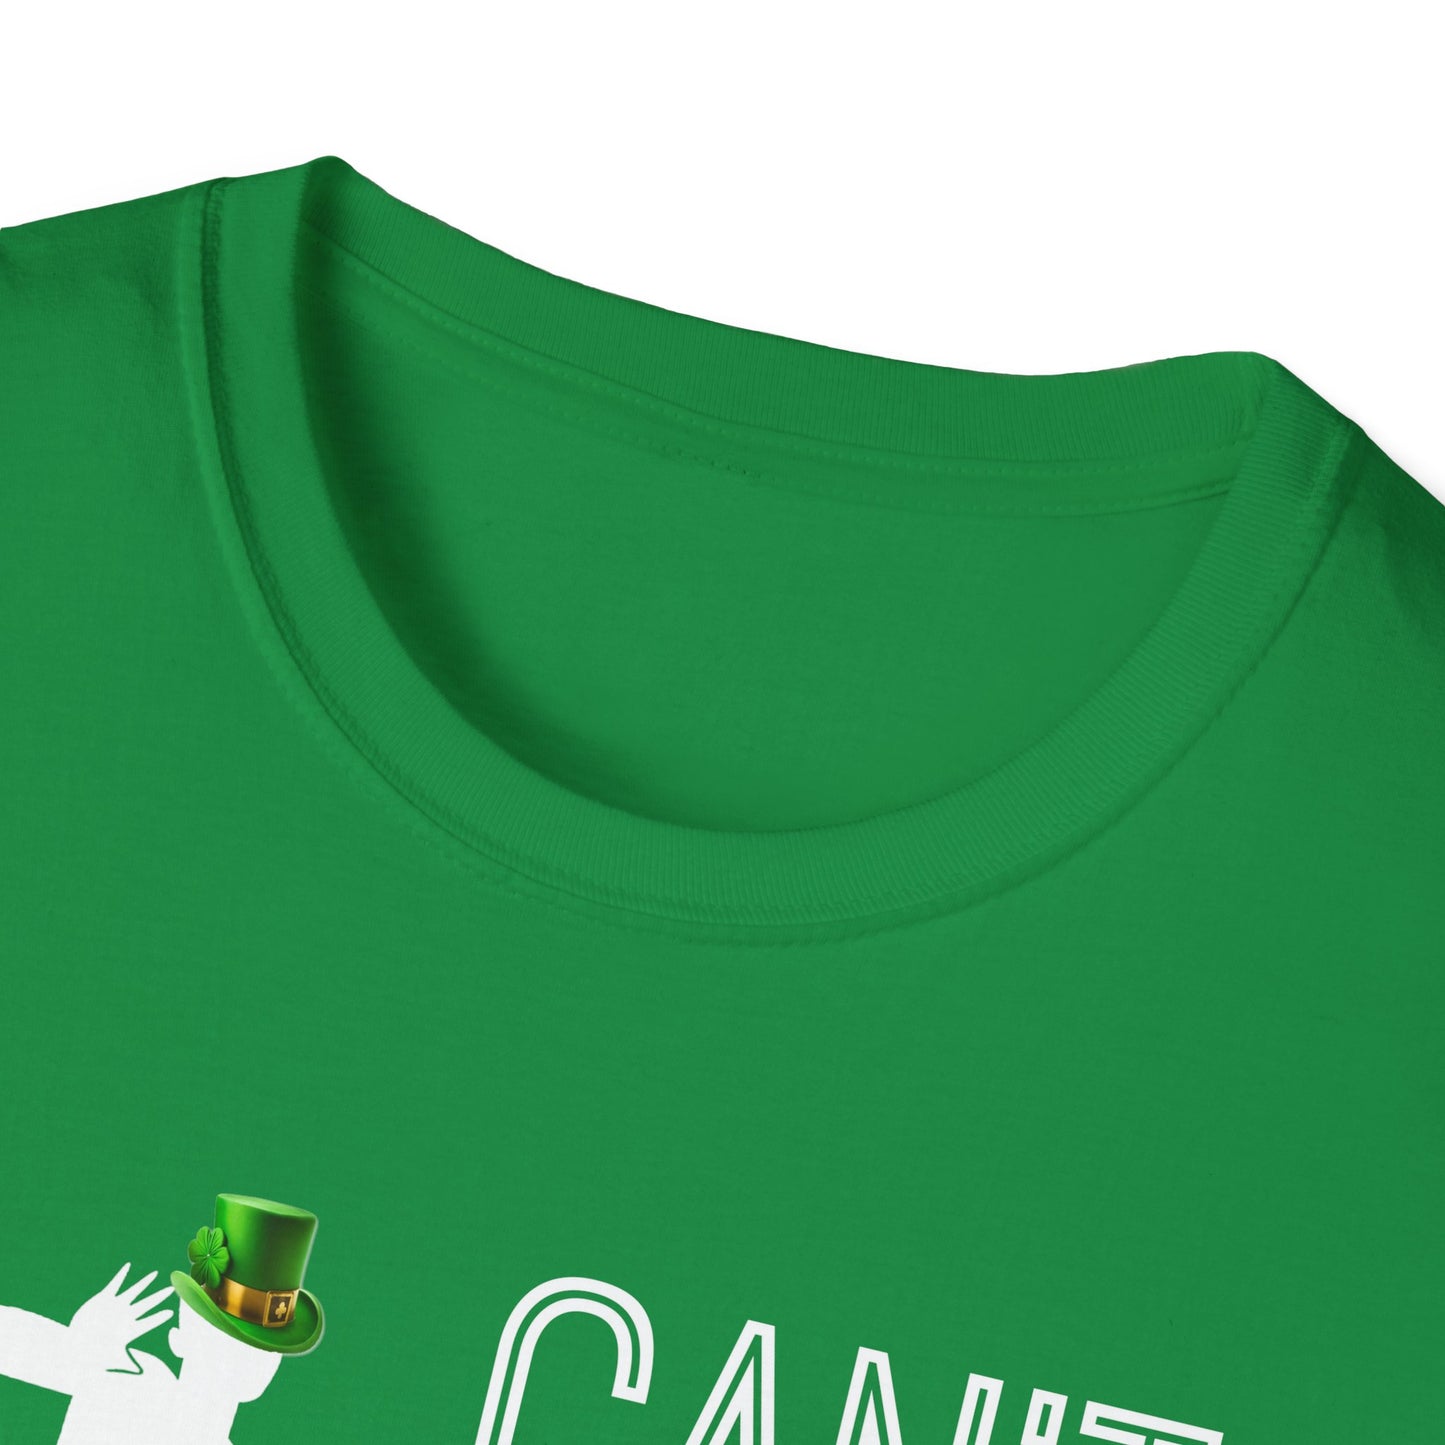 St. Patrick's Day Shirt, Can't Pinch This, MC Hammer Parody, Unisex Gildan Tee